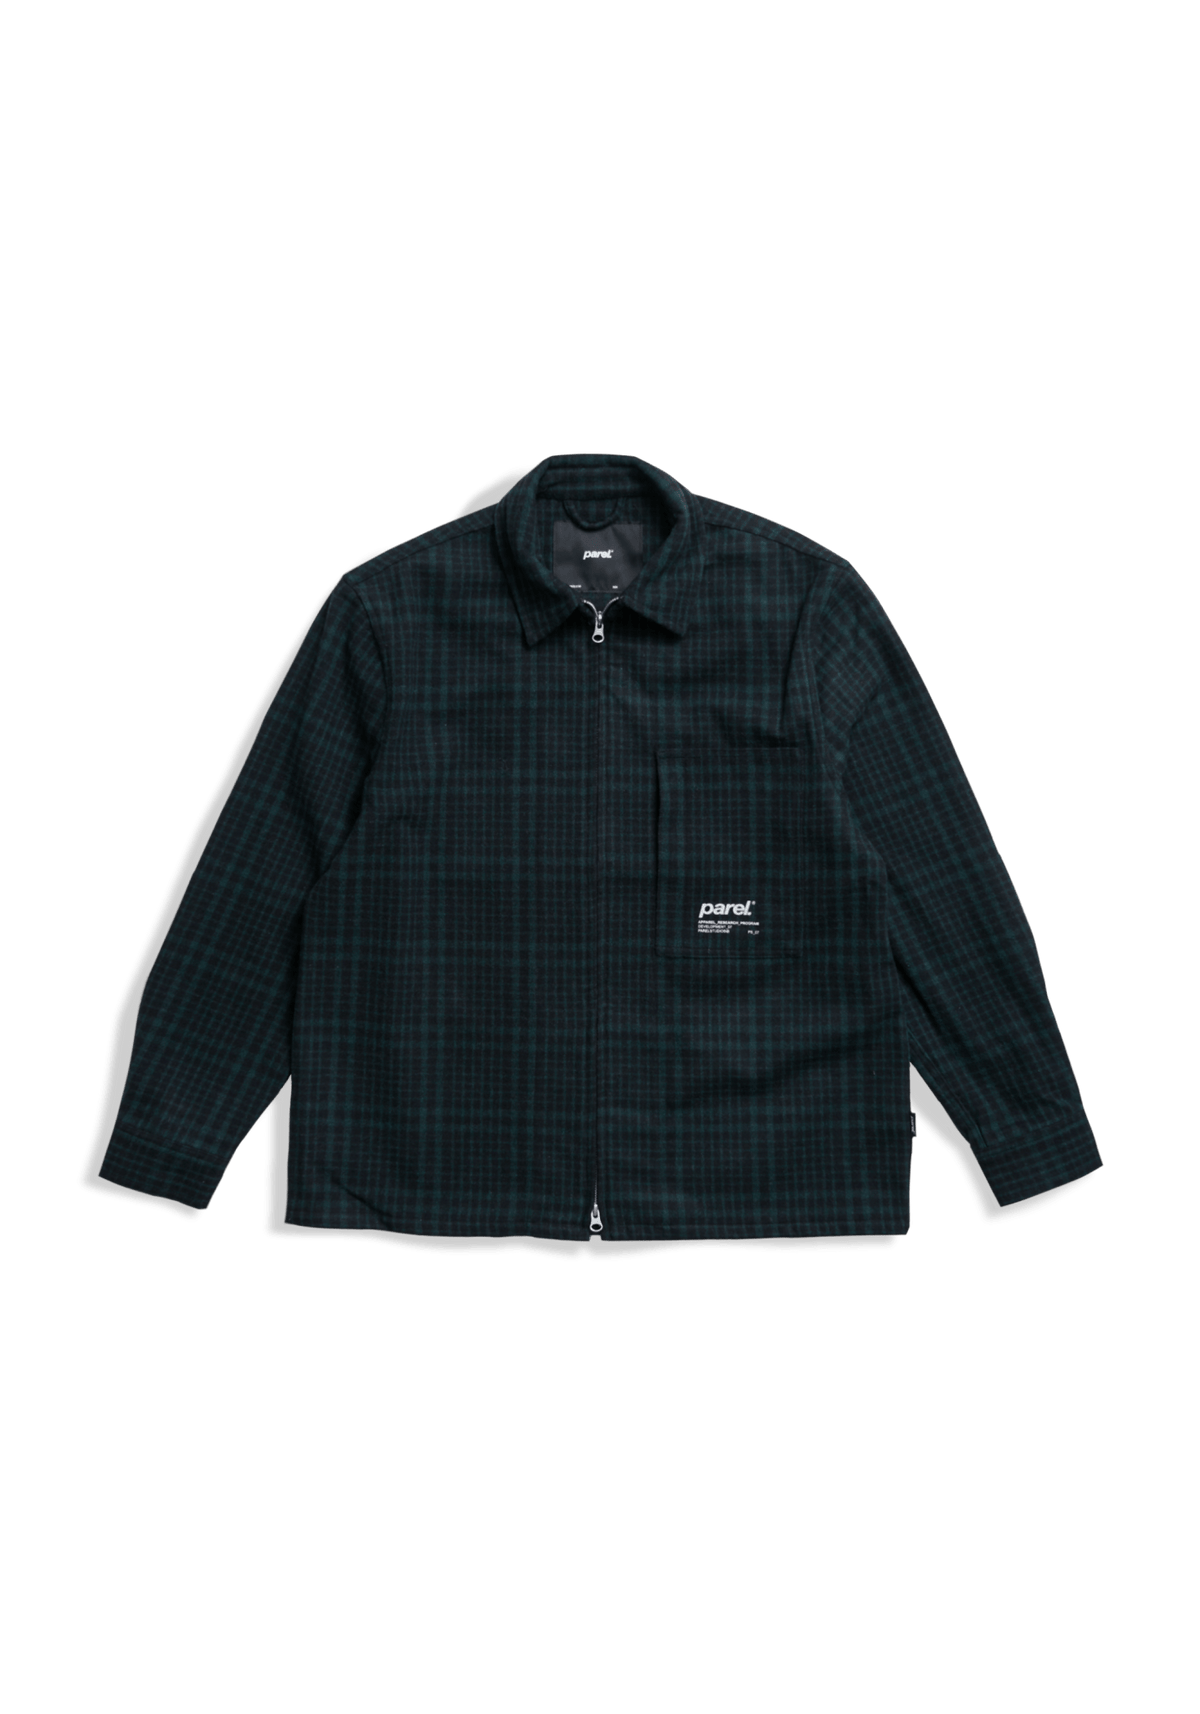 Samara Shirt - Black/Green